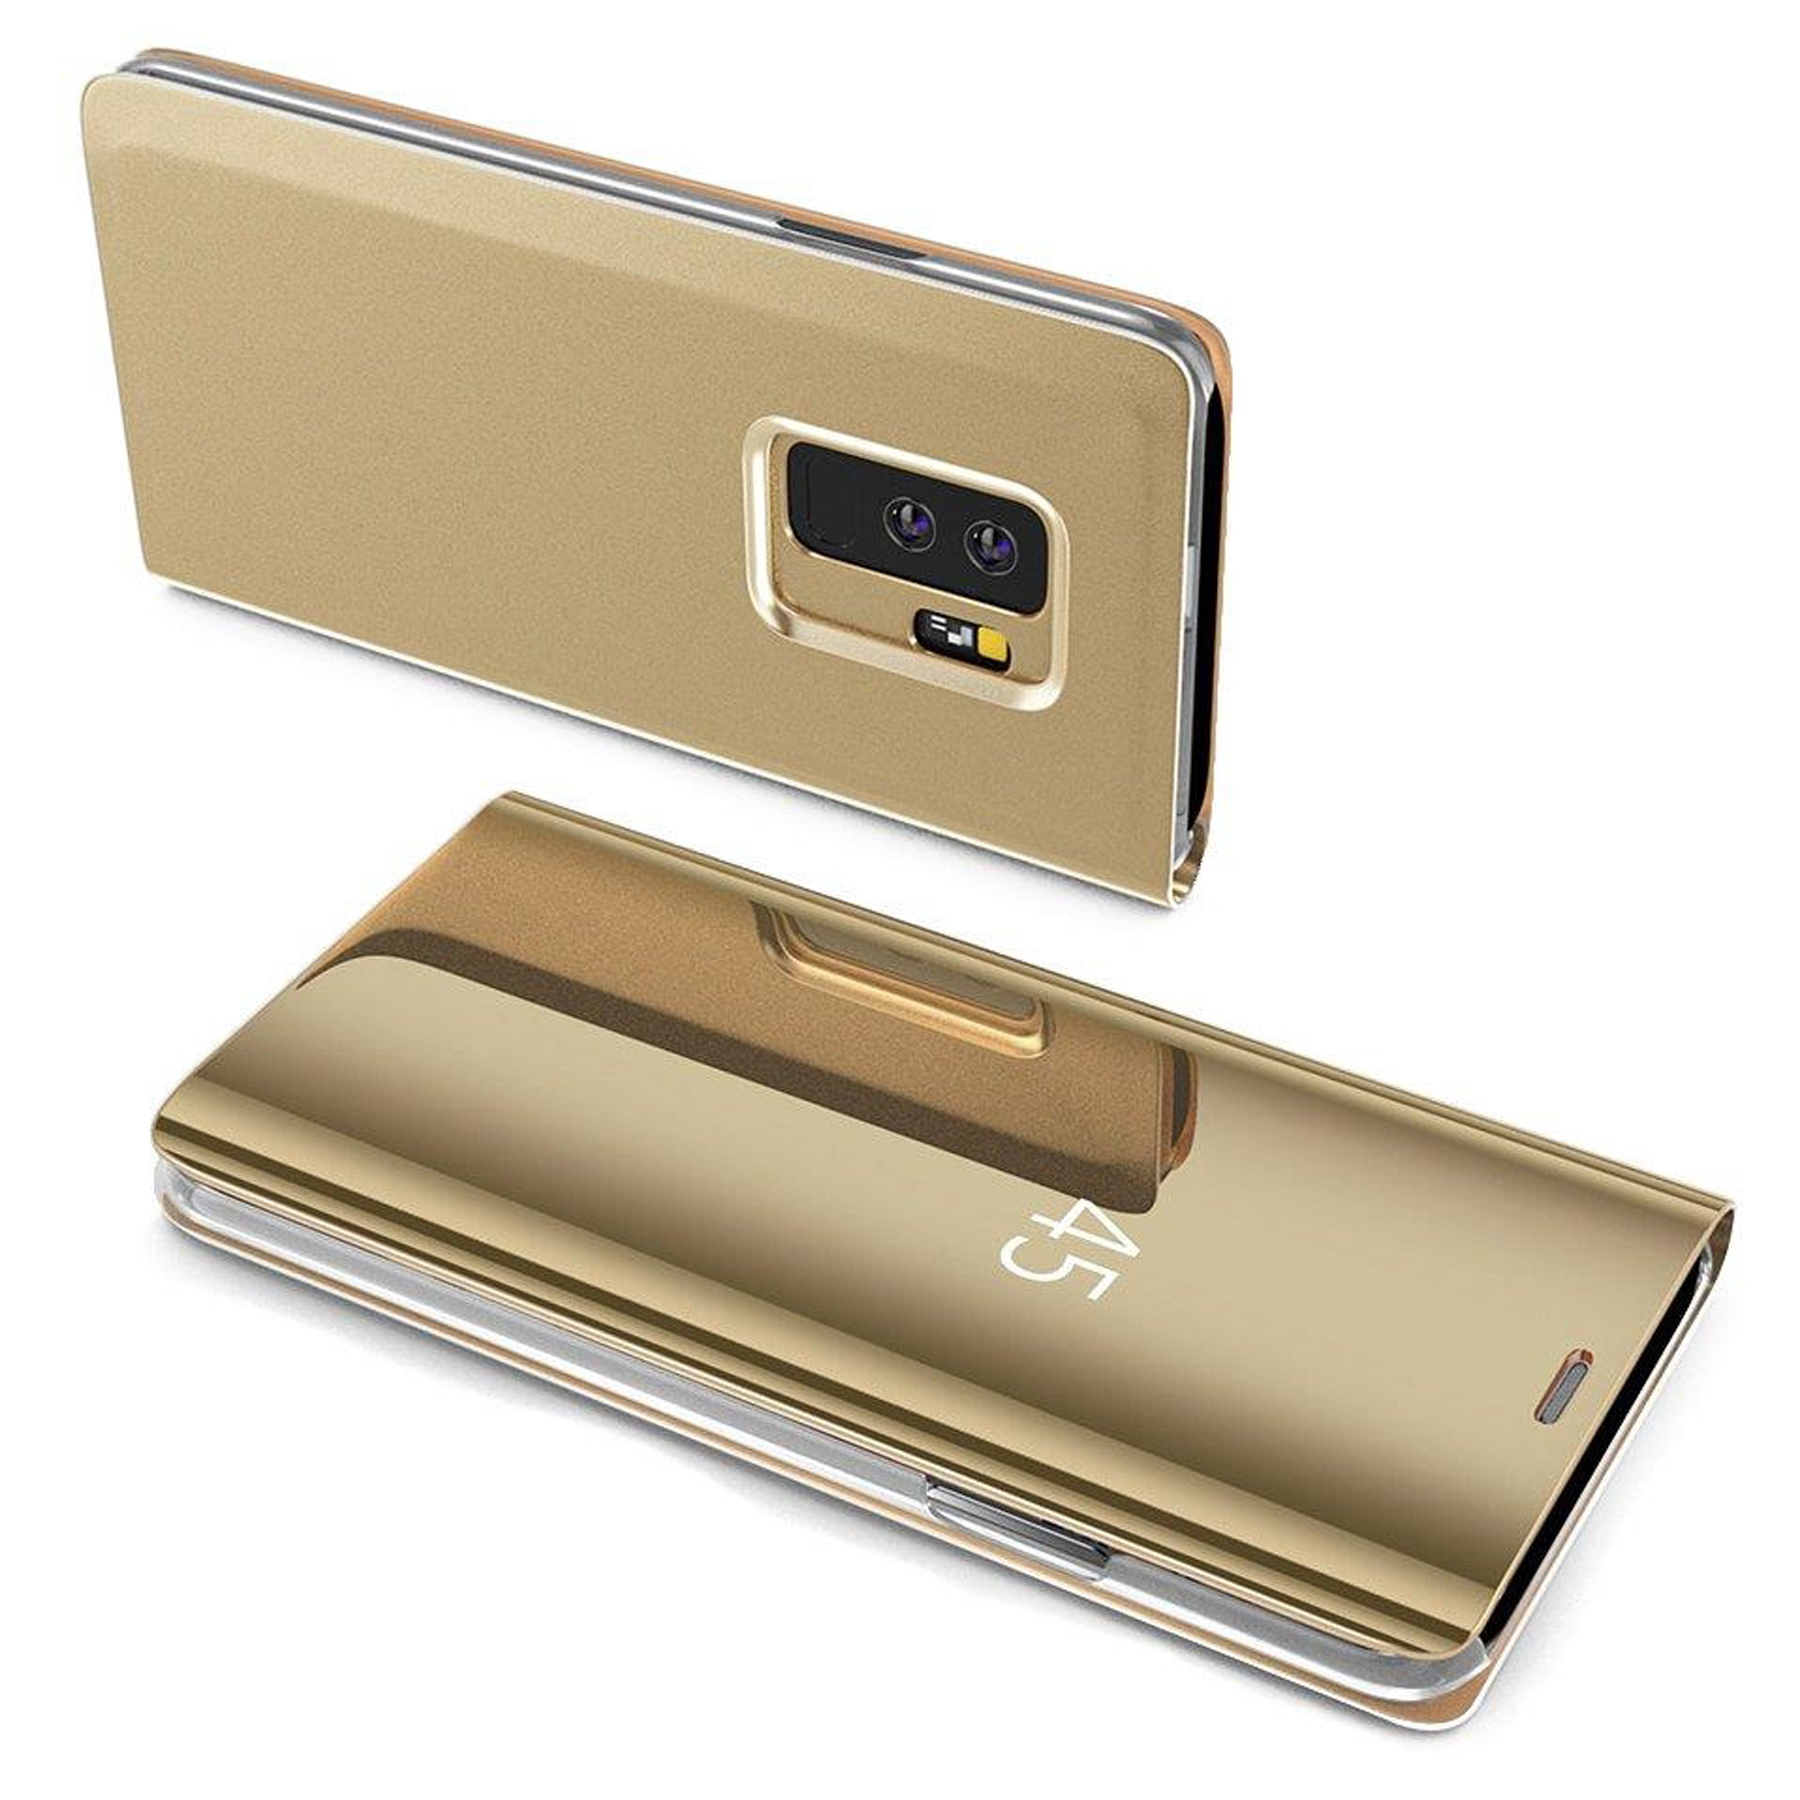 P30 Case, View Pro, Huawei, Gold COFI Bookcover, Smart